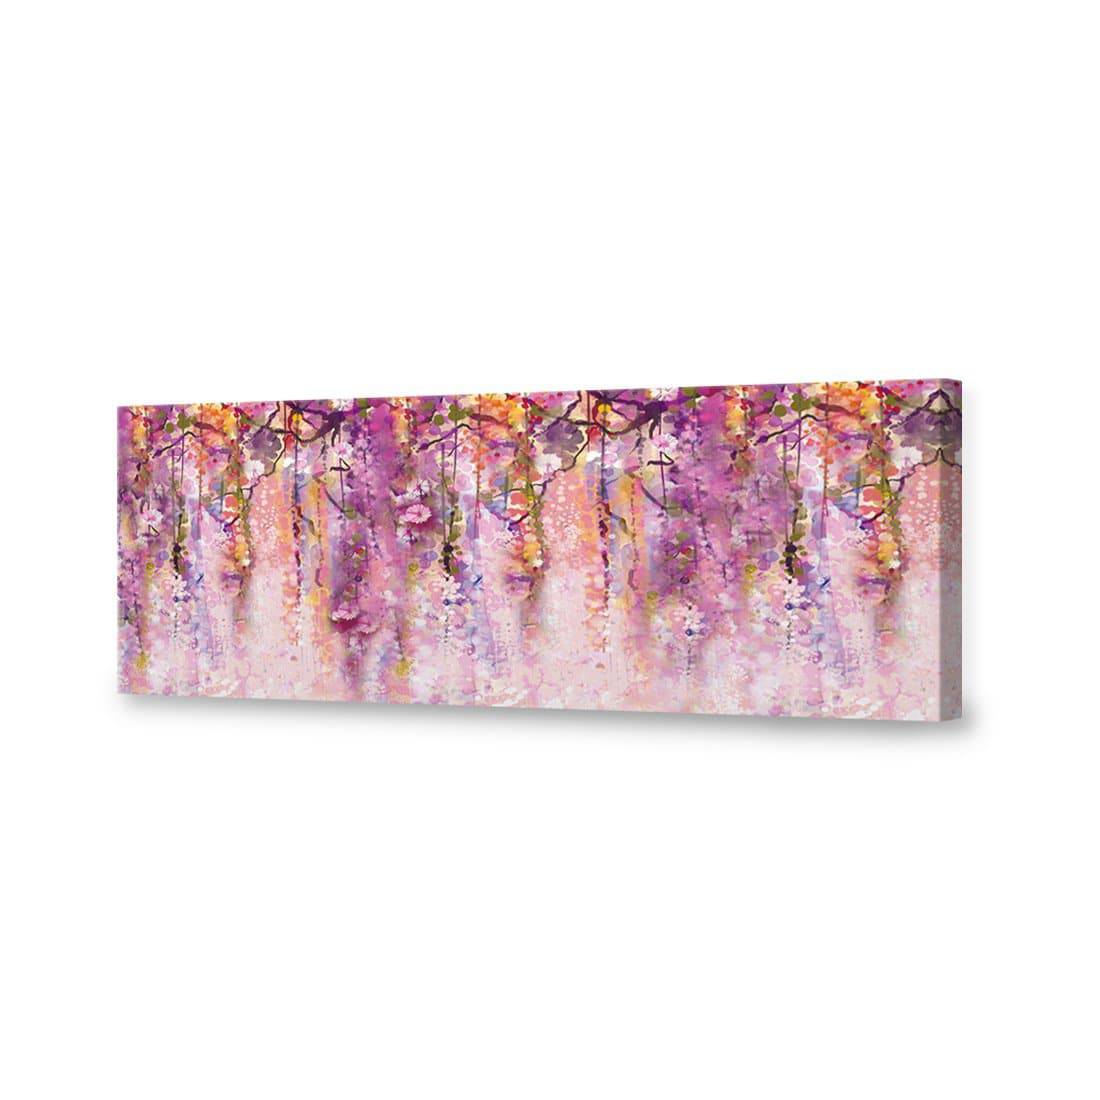 Lilac Dream (Long) Canvas Art-Canvas-Wall Art Designs-60x20cm-Canvas - No Frame-Wall Art Designs